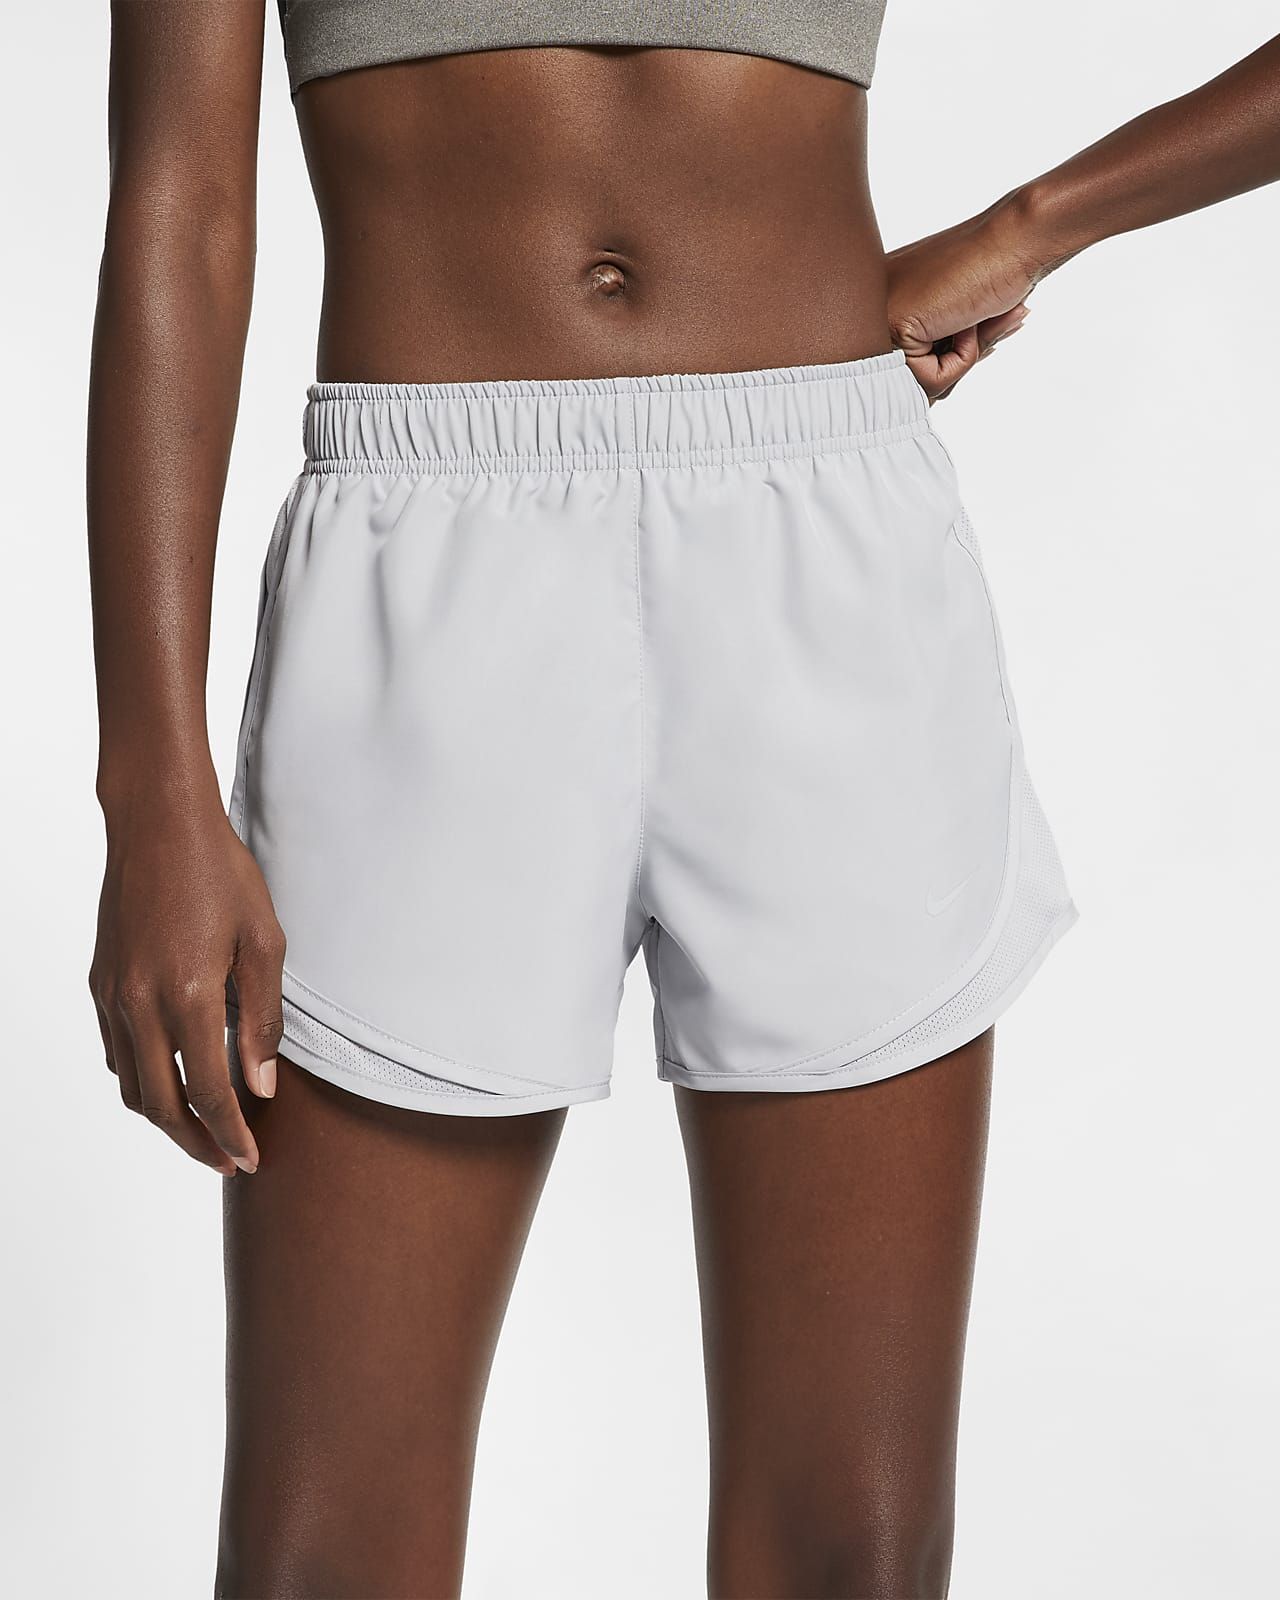 Nike Tempo Women's Running Shorts. Nike.com | Nike (US)